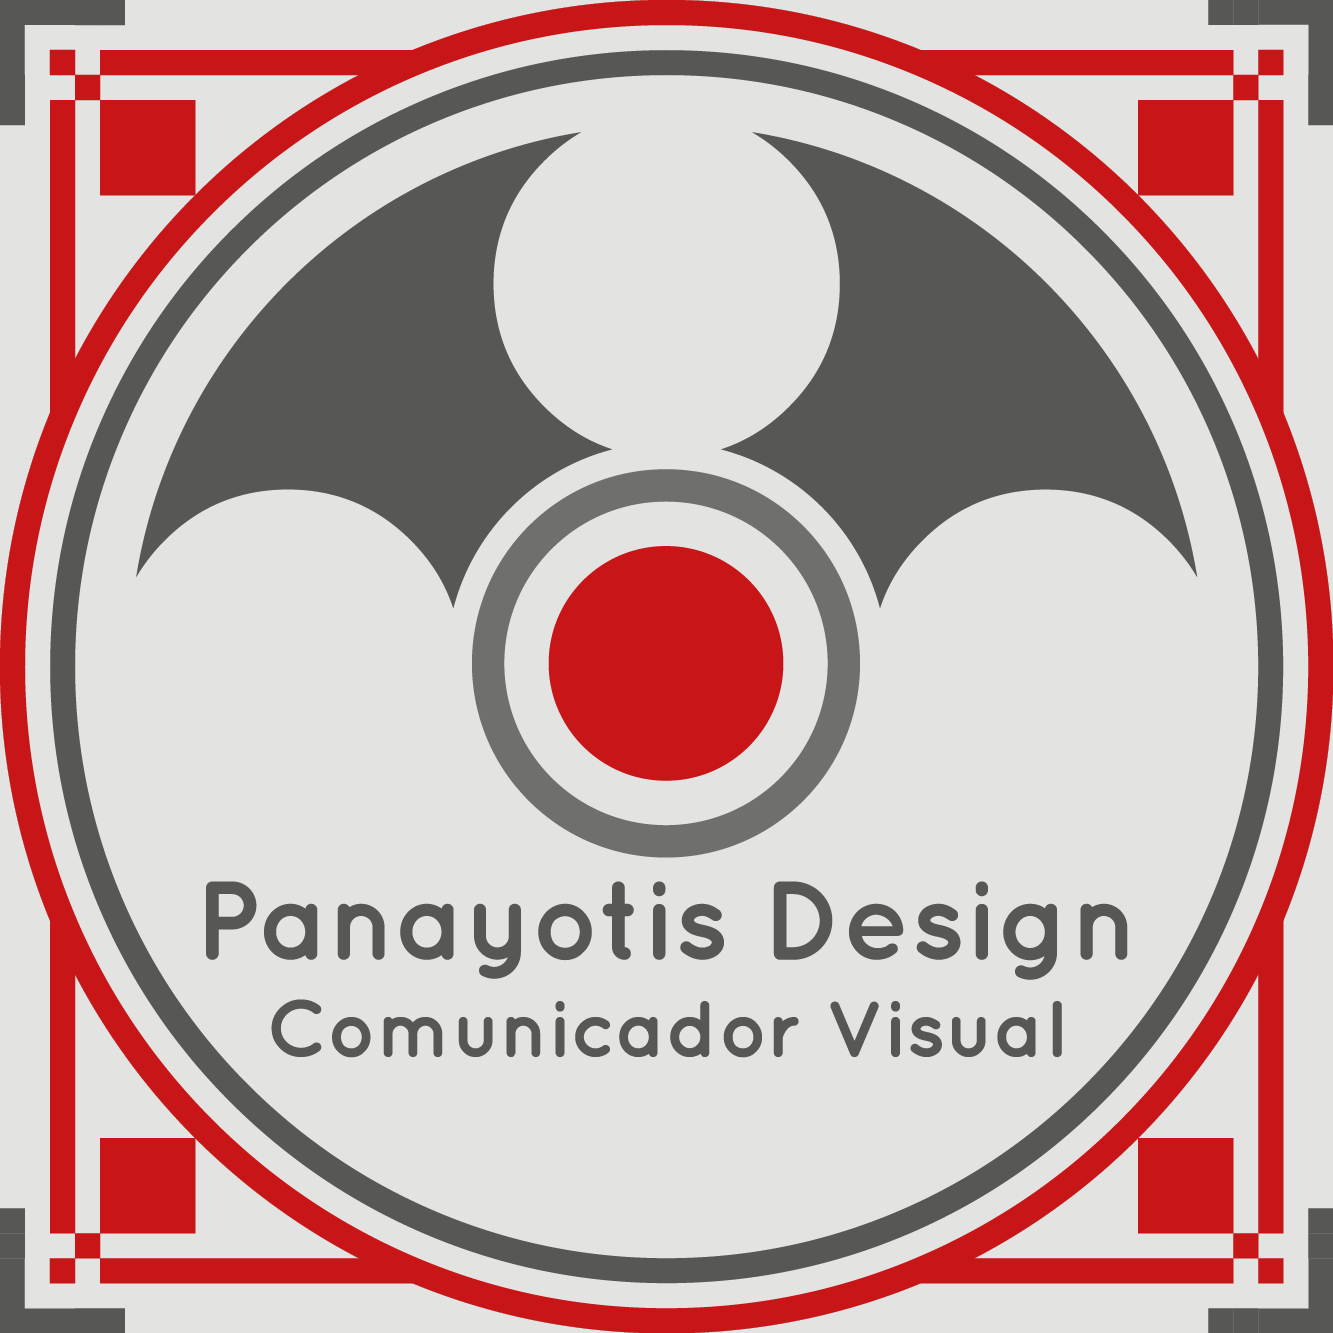 Panayotis Design